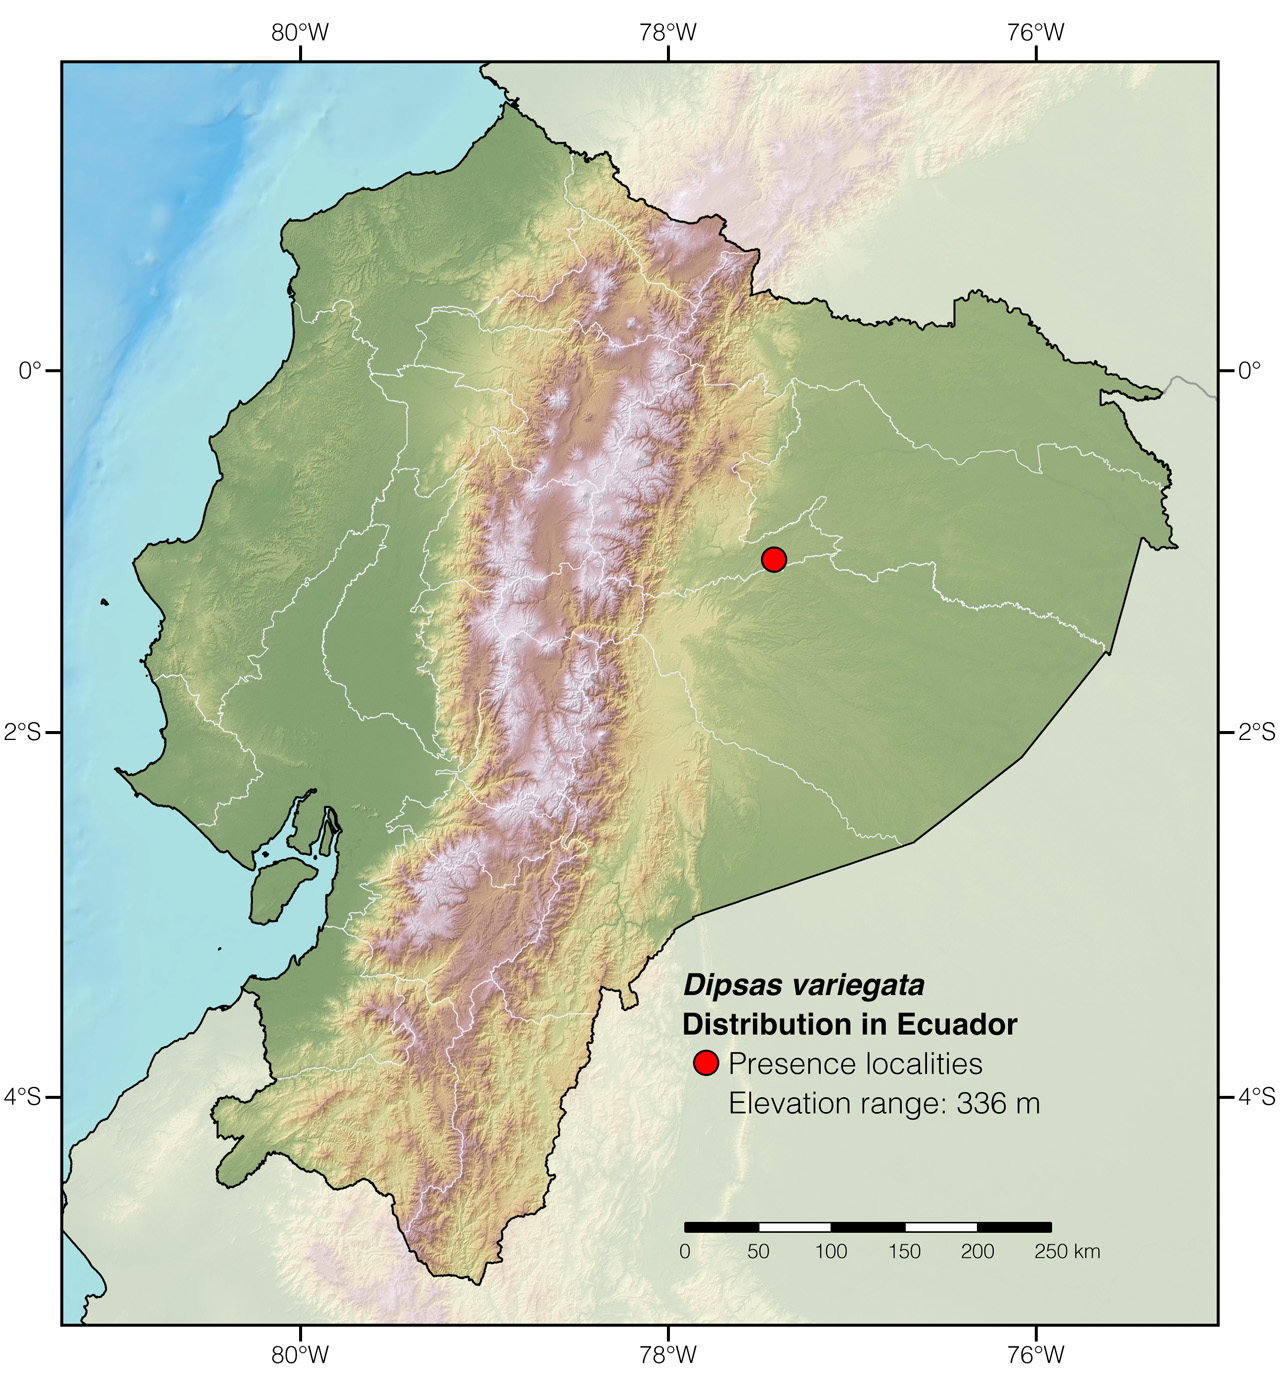 Distribution of Dipsas variegata in Ecuador